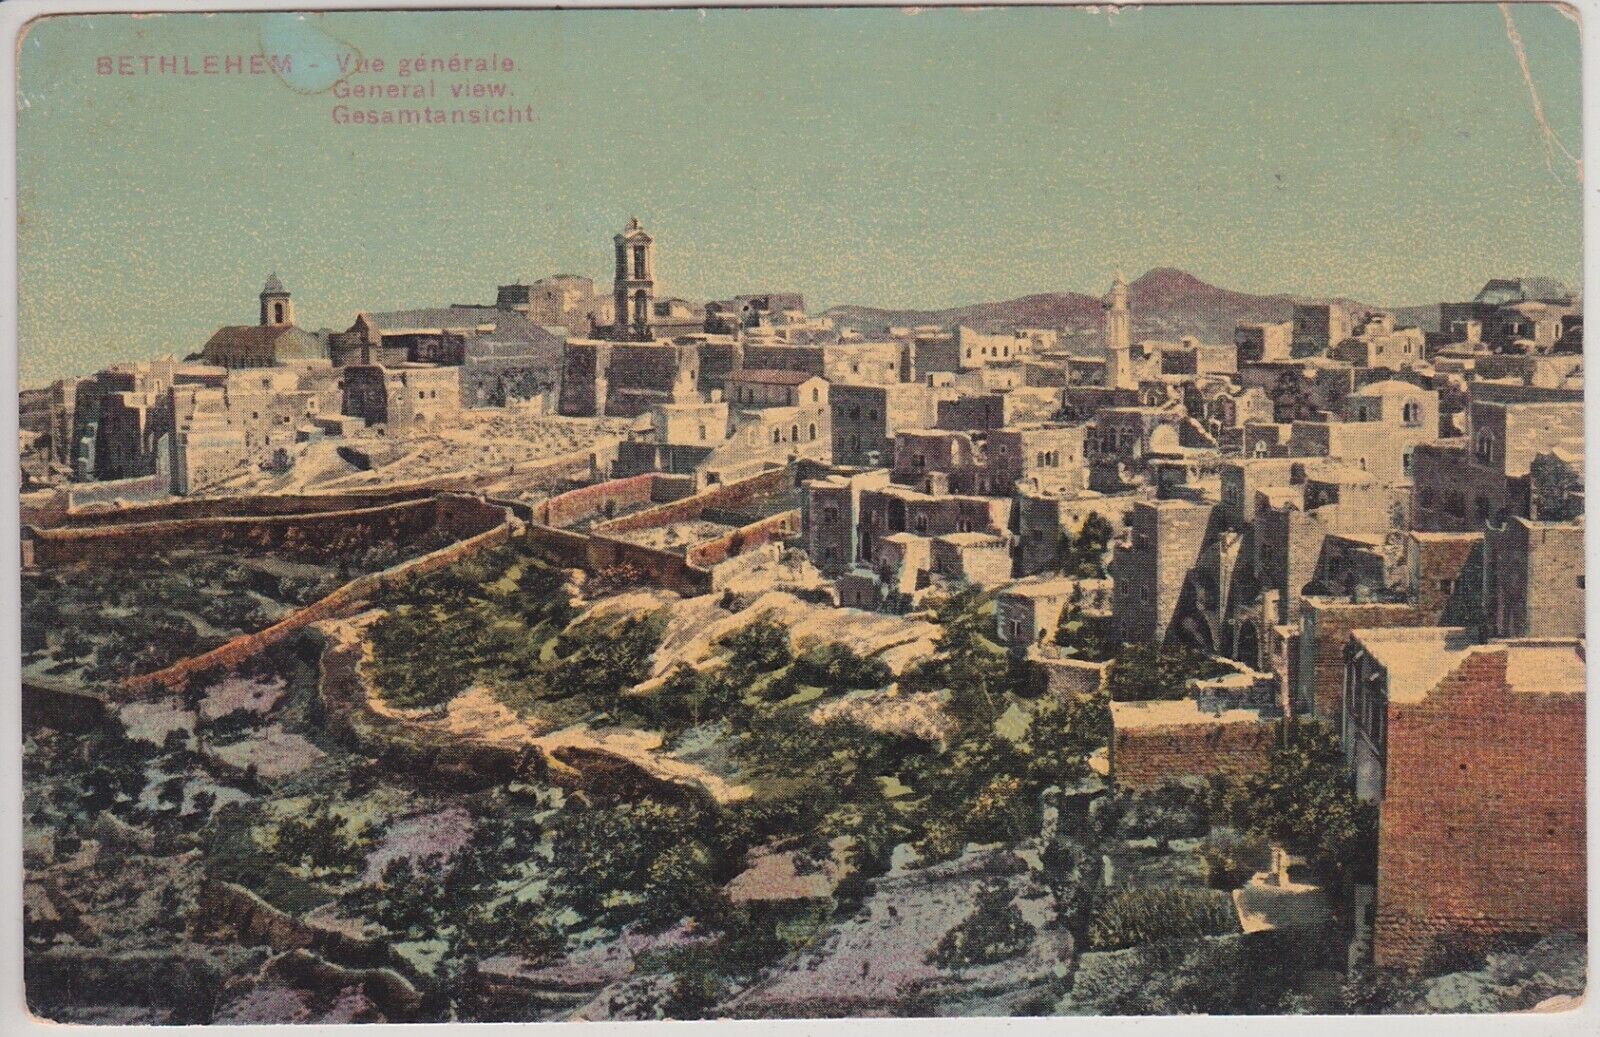 Bethlehem, Israel. General View. Antique Postcard.